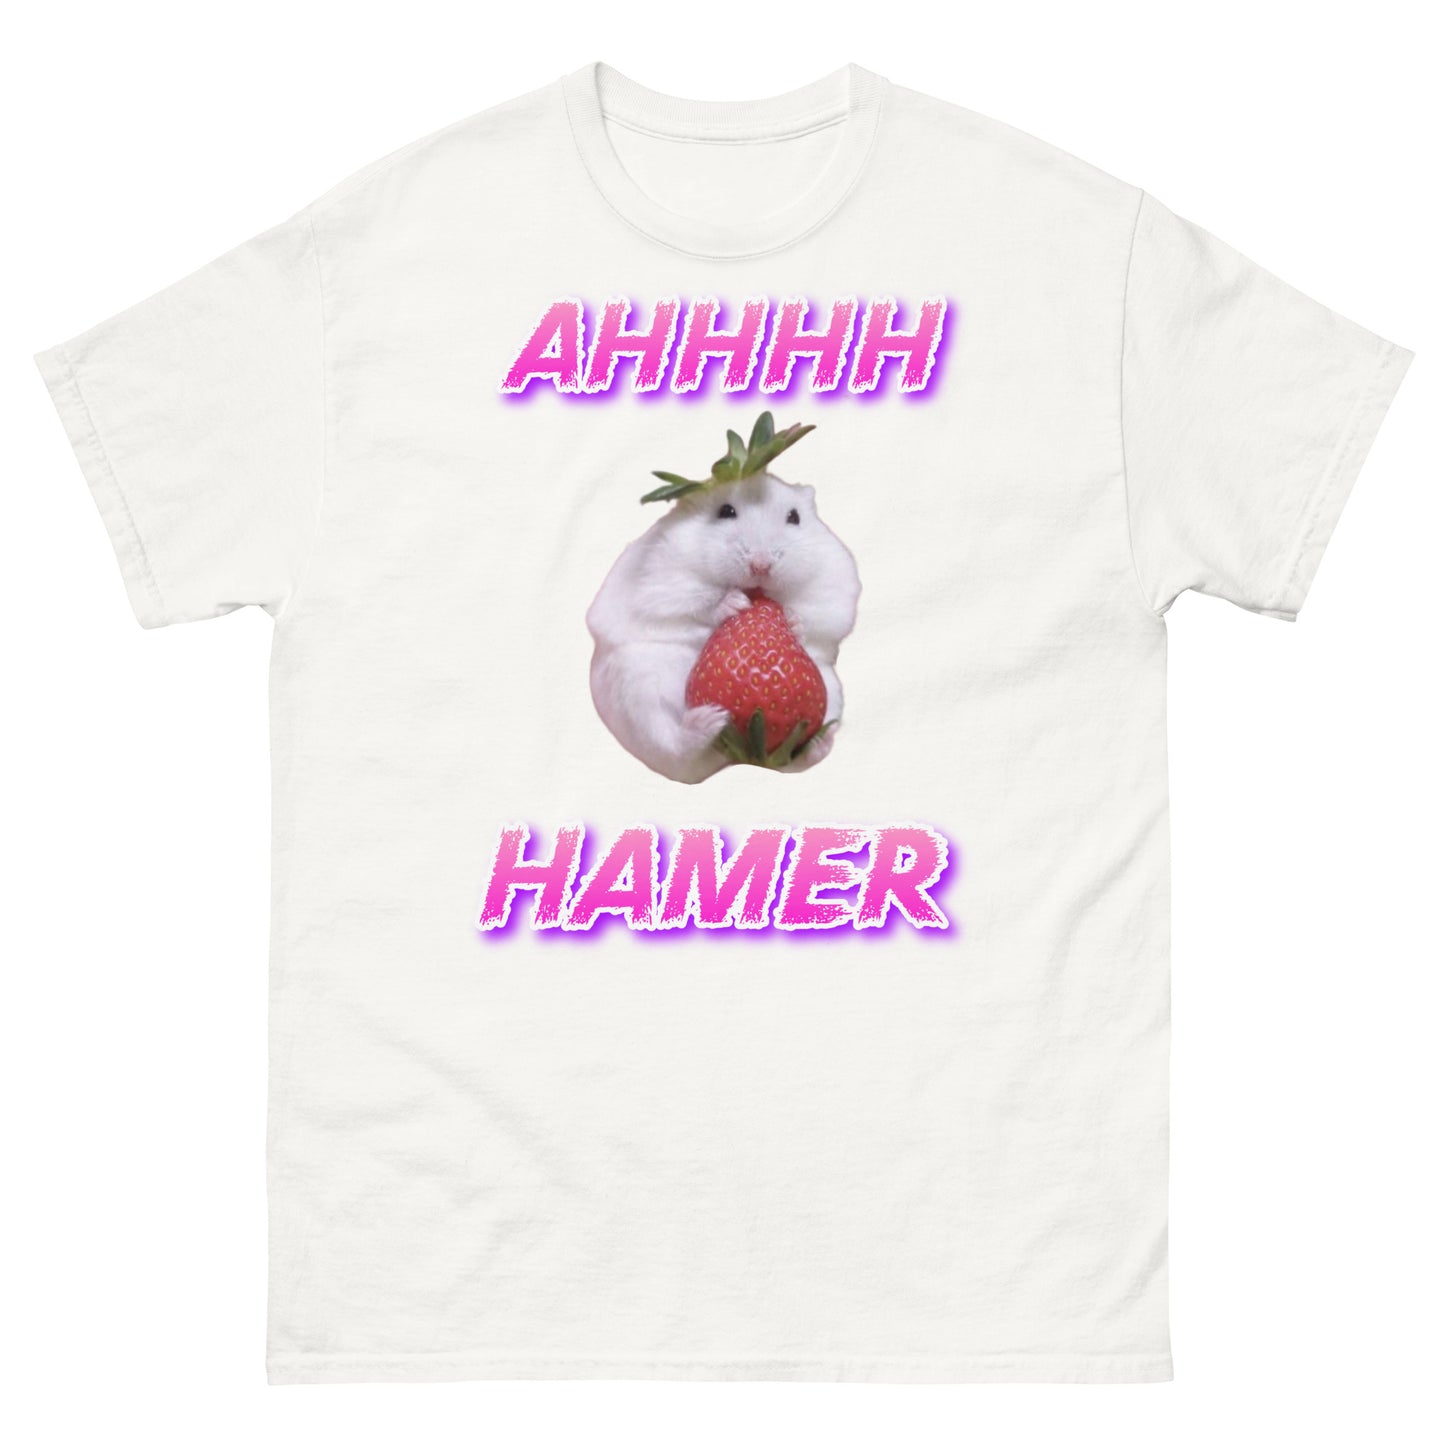 Hamster / Hamer Cringey Tee (clean version)